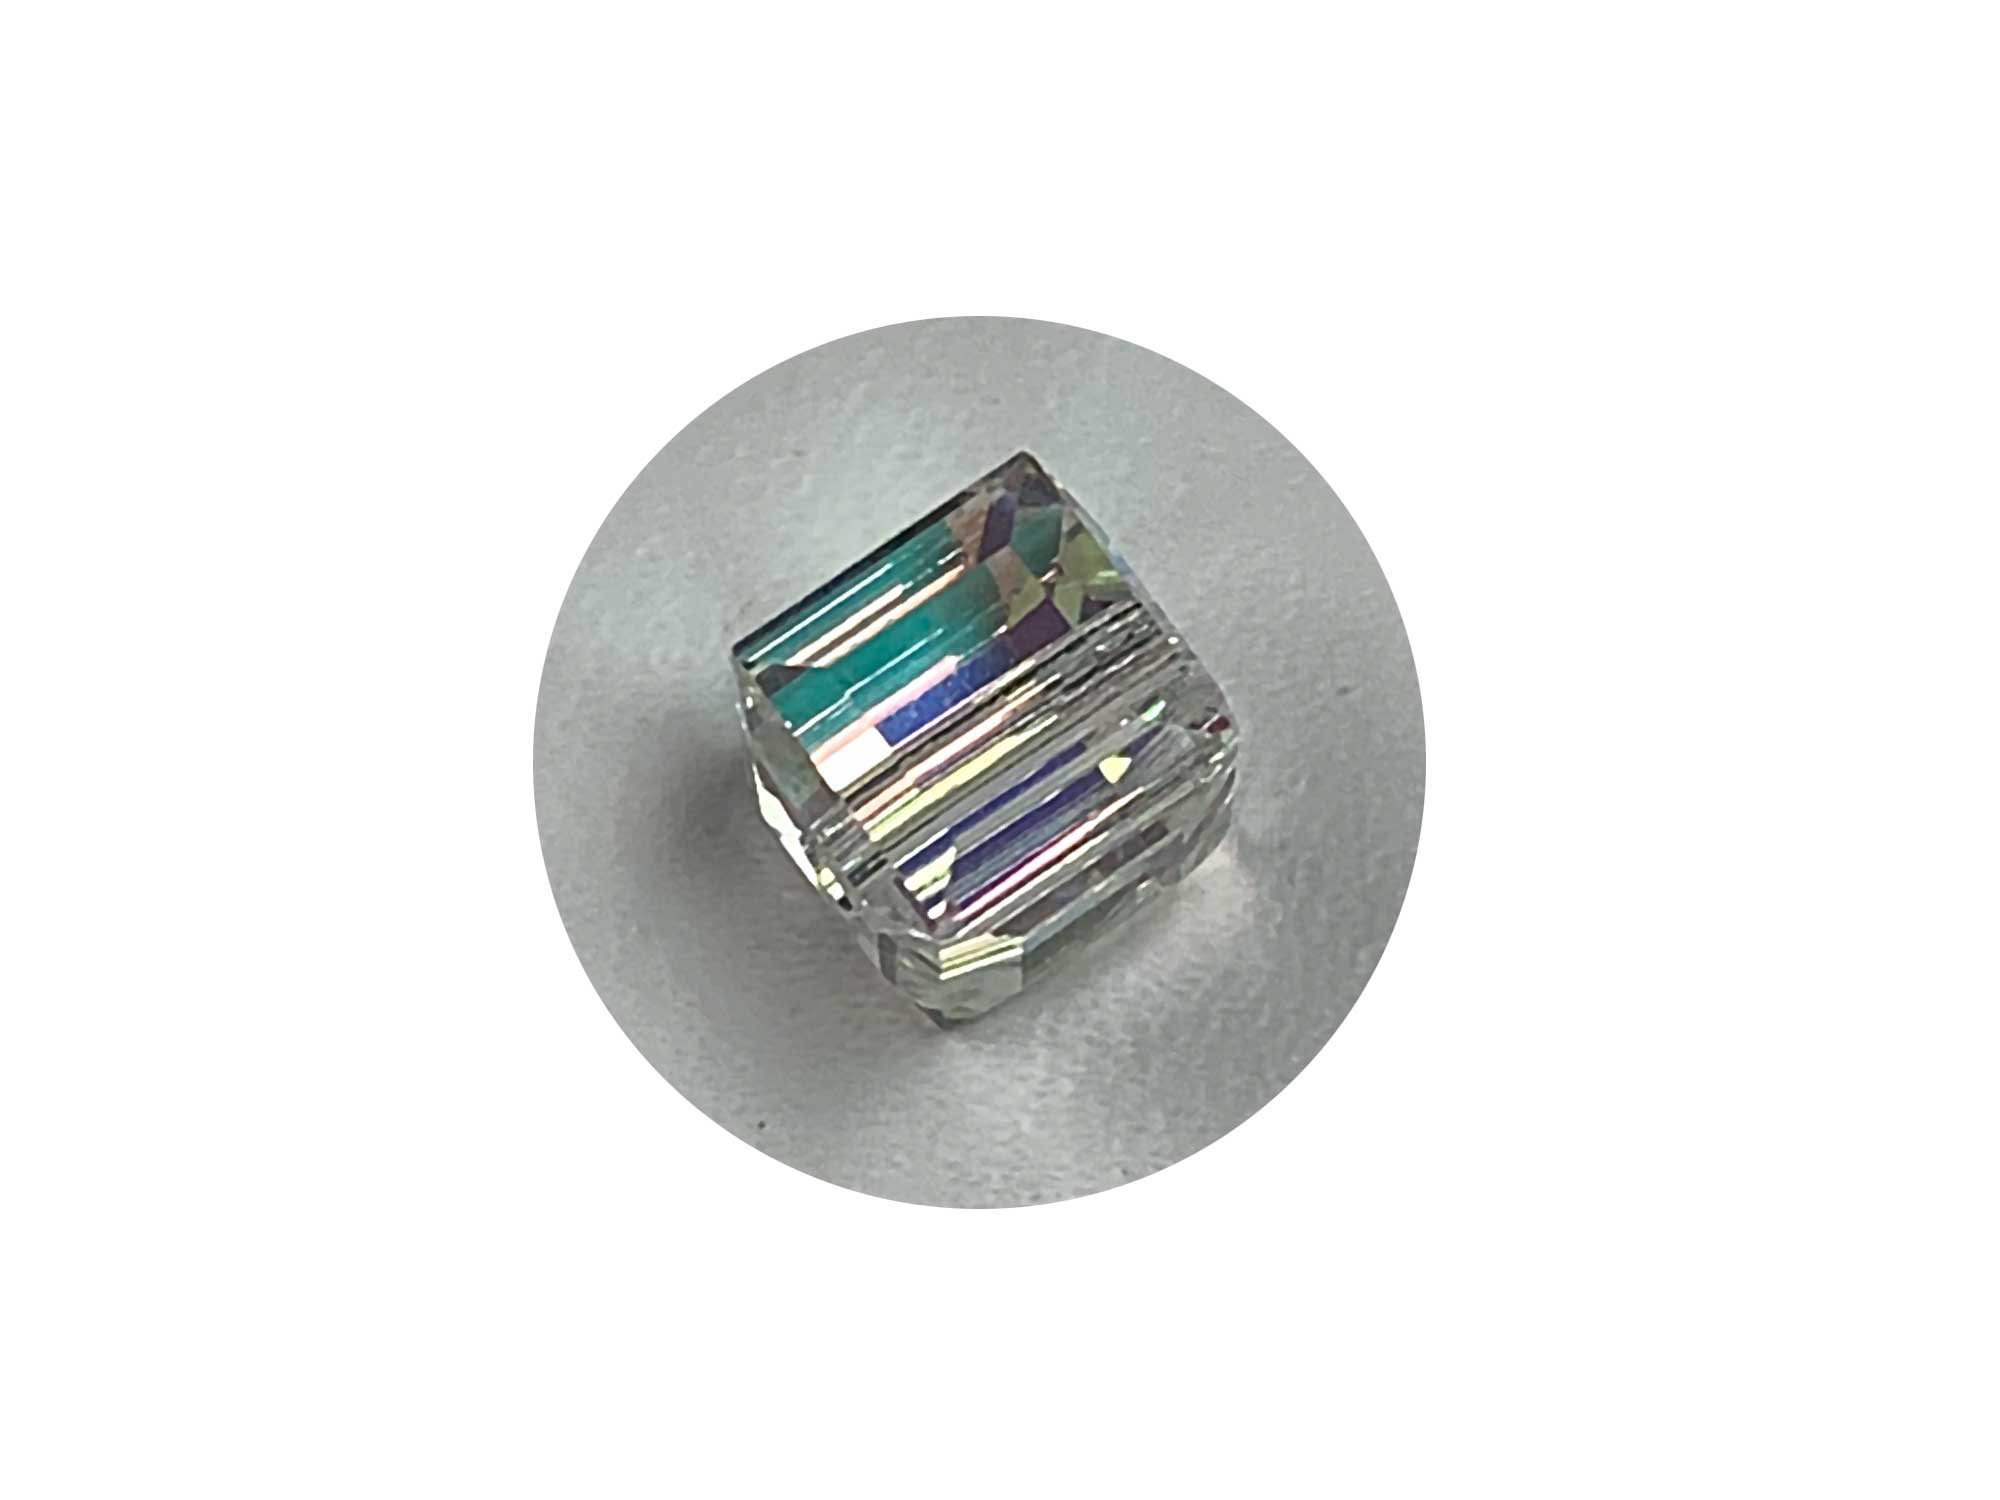 Crystal AB, Preciosa Czech Machine Cut Cube #001 Crystal Beads, size 6mm, 12 pieces